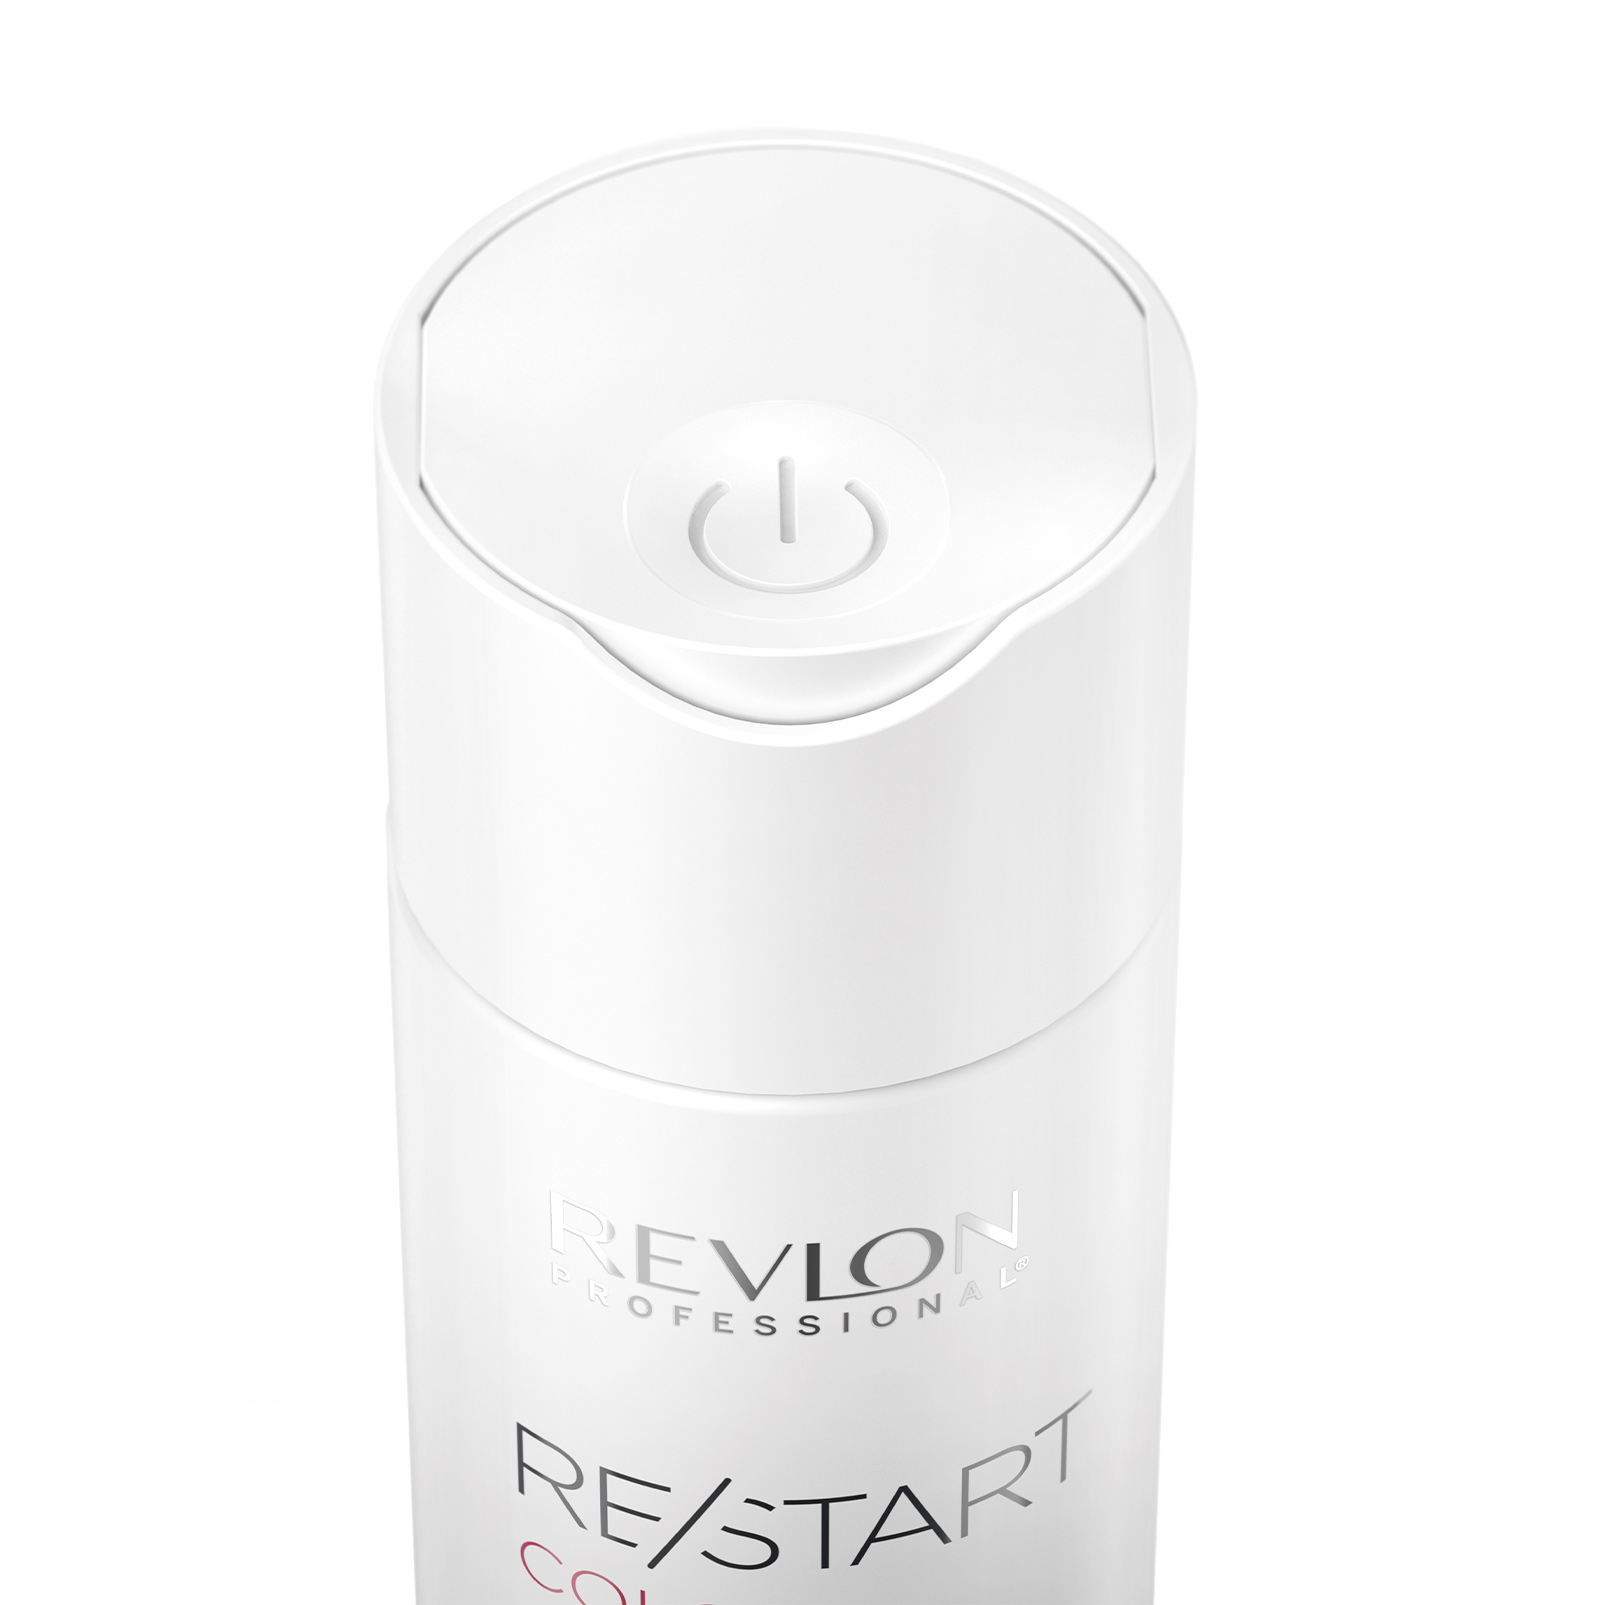 RE/START™ Color Protective Micellar Shampoo - Revlon Professional